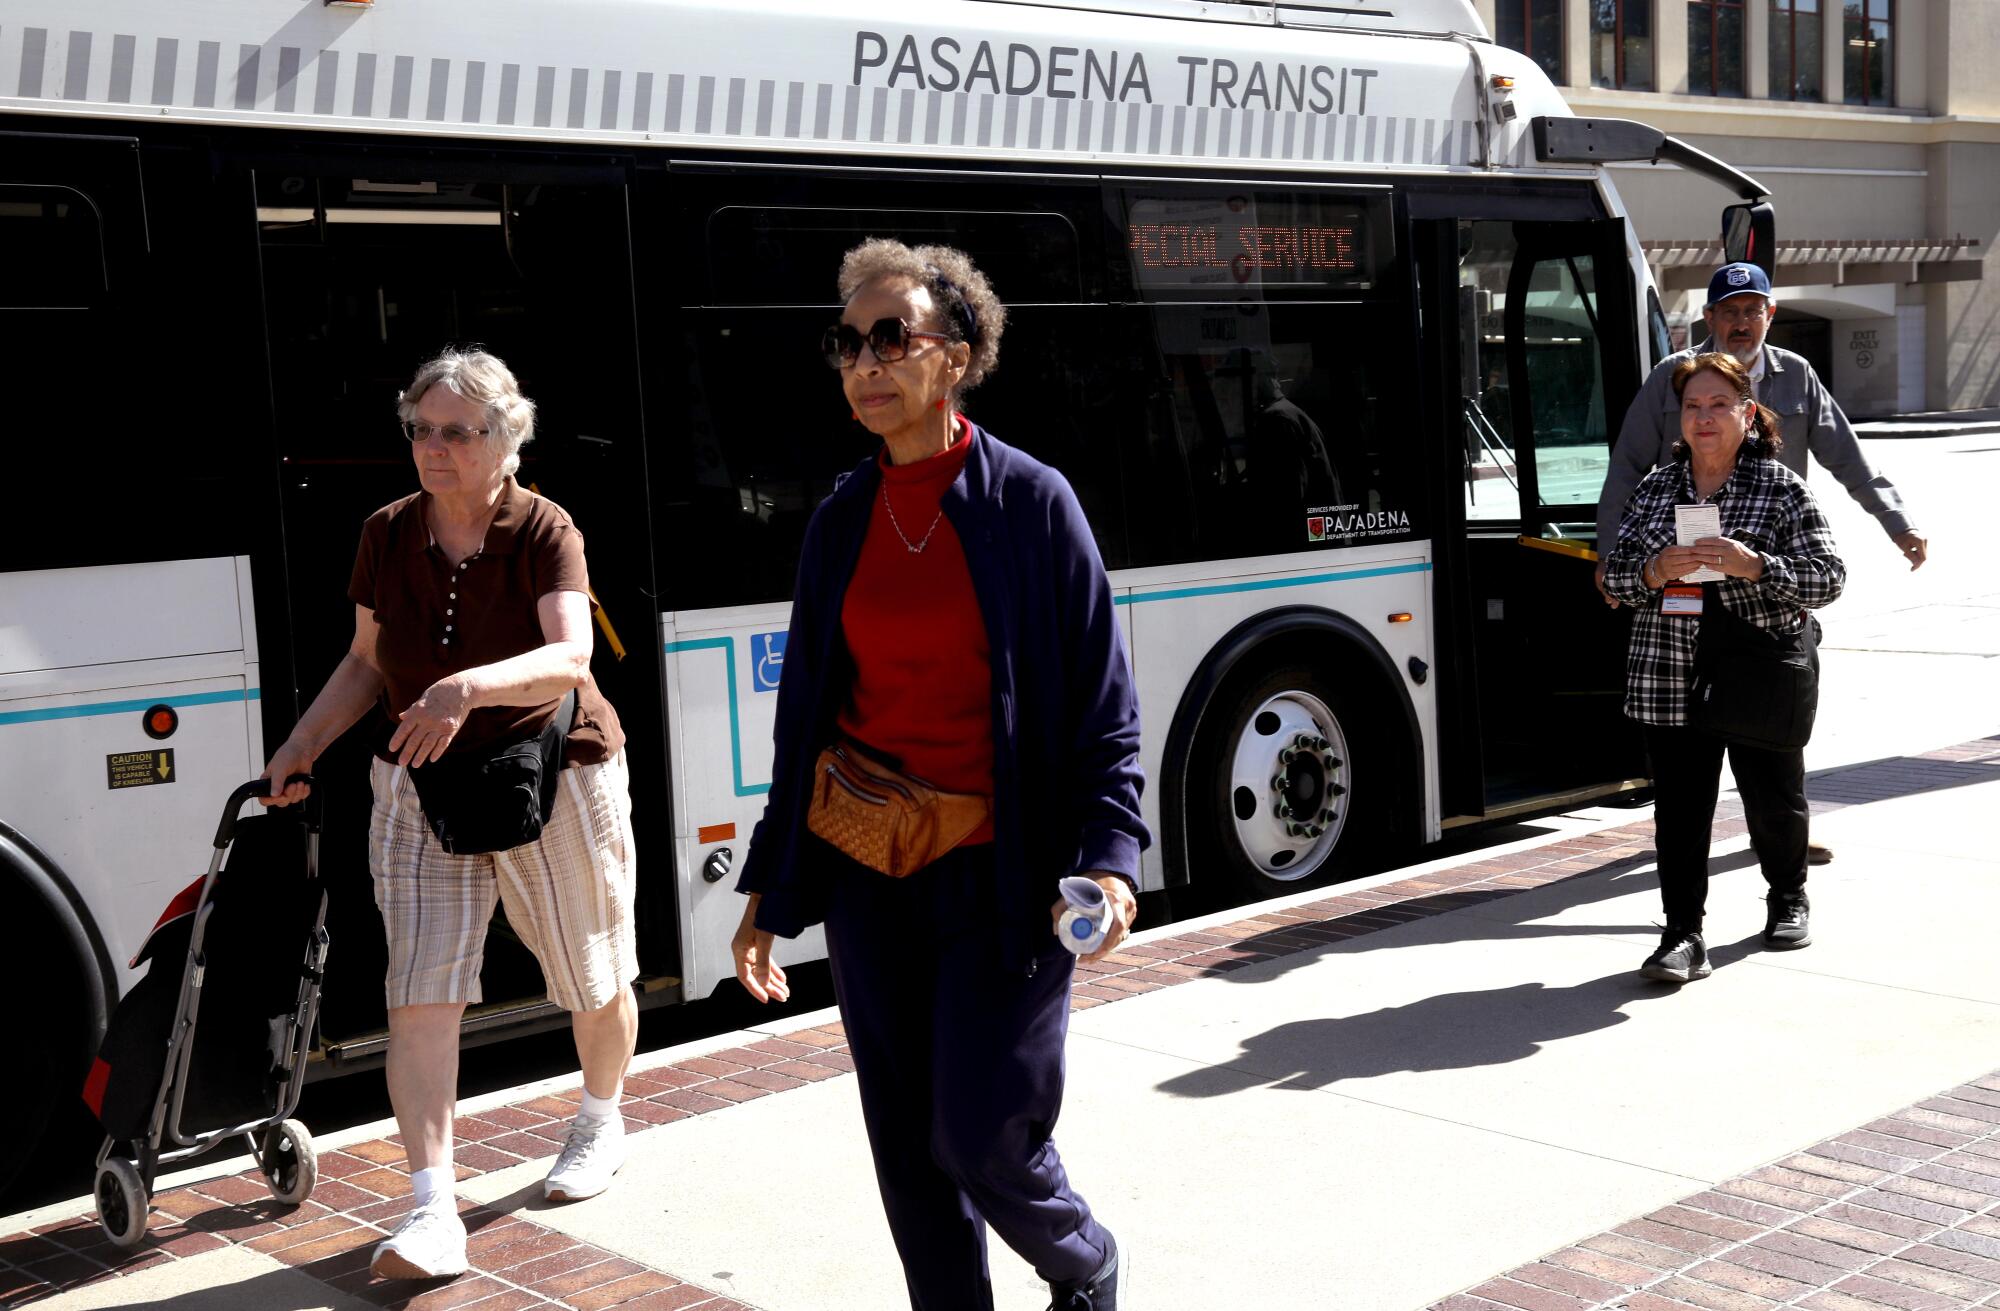 Passengers exit a Pasadena transit bus.